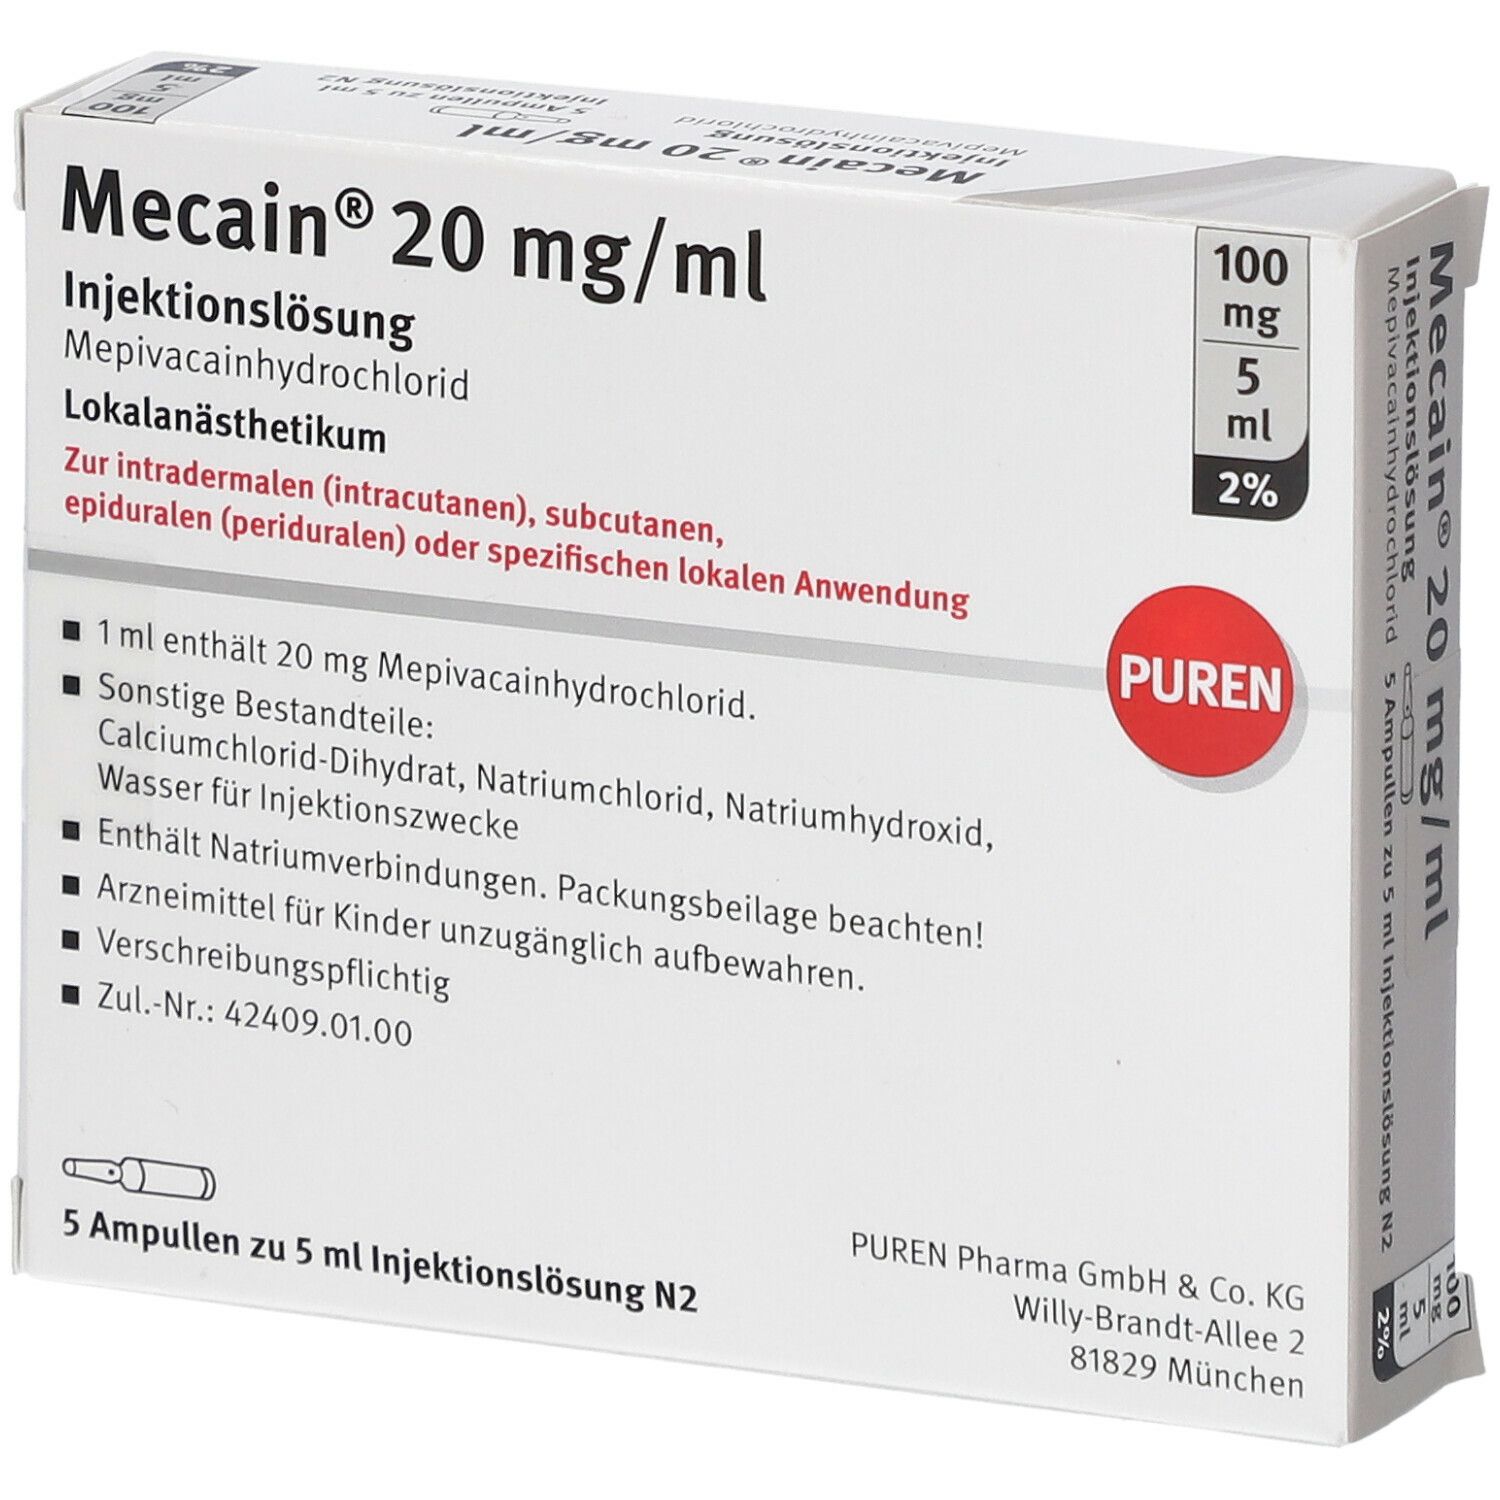 Mecain® 20 mg/ml